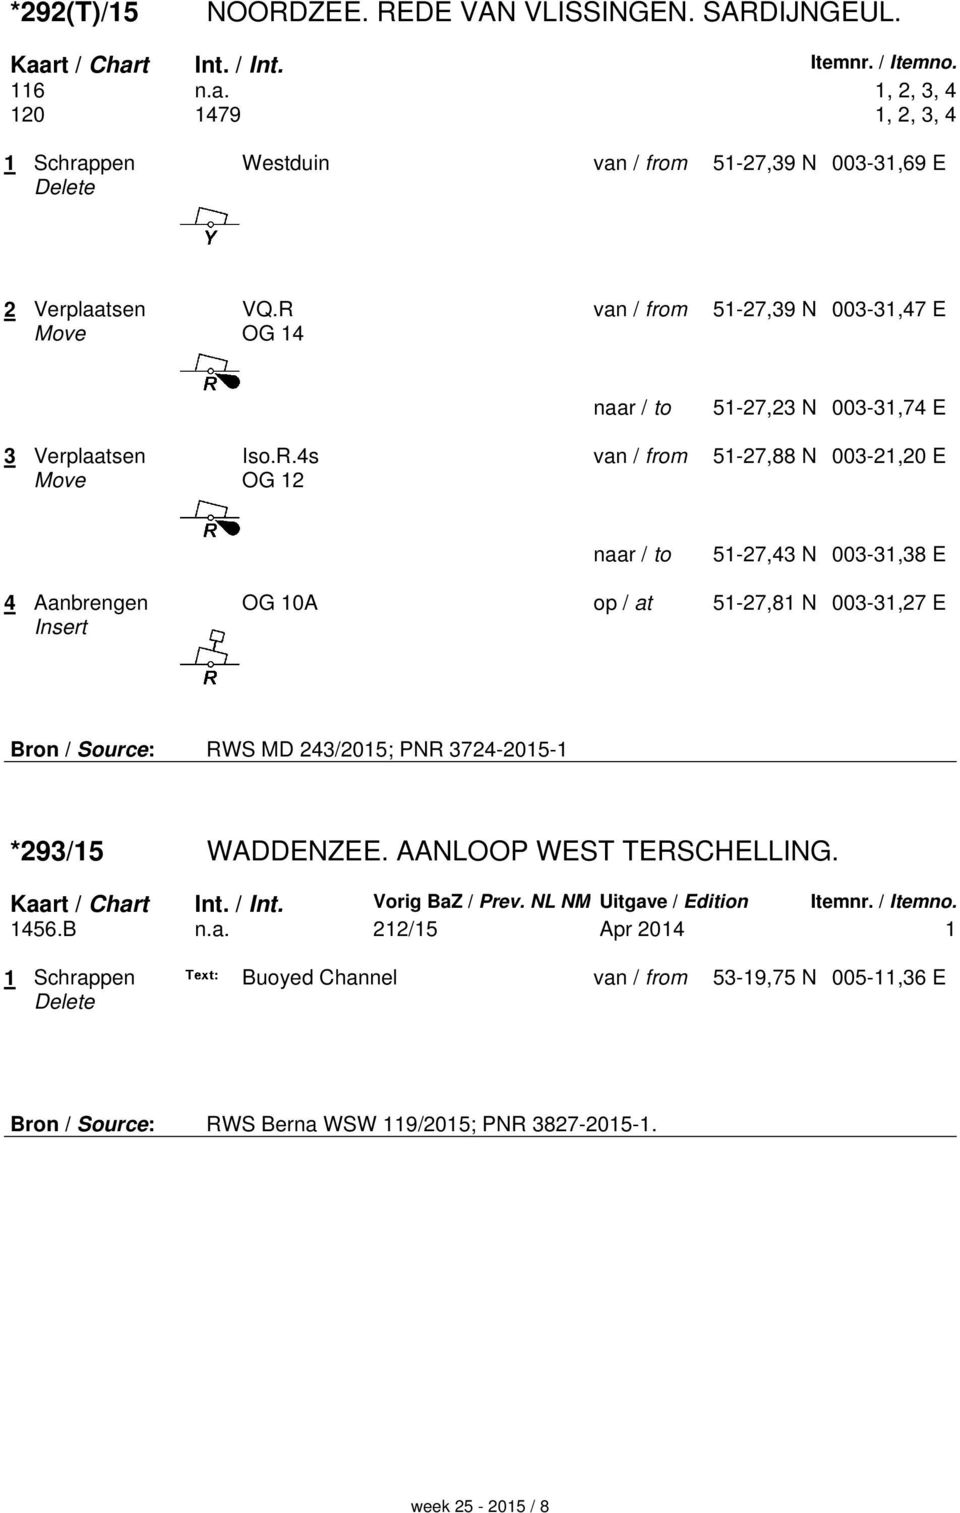 AANLOOP WEST TERSCHELLING. Kaart / Chart Int. / Int. Vorig BaZ / Prev. NL NM Uitgave / Edition Itemnr. / Itemno. 1456.B n.a. 212/15 Apr 2014 1 1 Schrappen Buoyed Channel 53-19,75 N 005-11,36 E Bron / Source: RWS Berna WSW 119/2015; PNR 3827-2015-1.